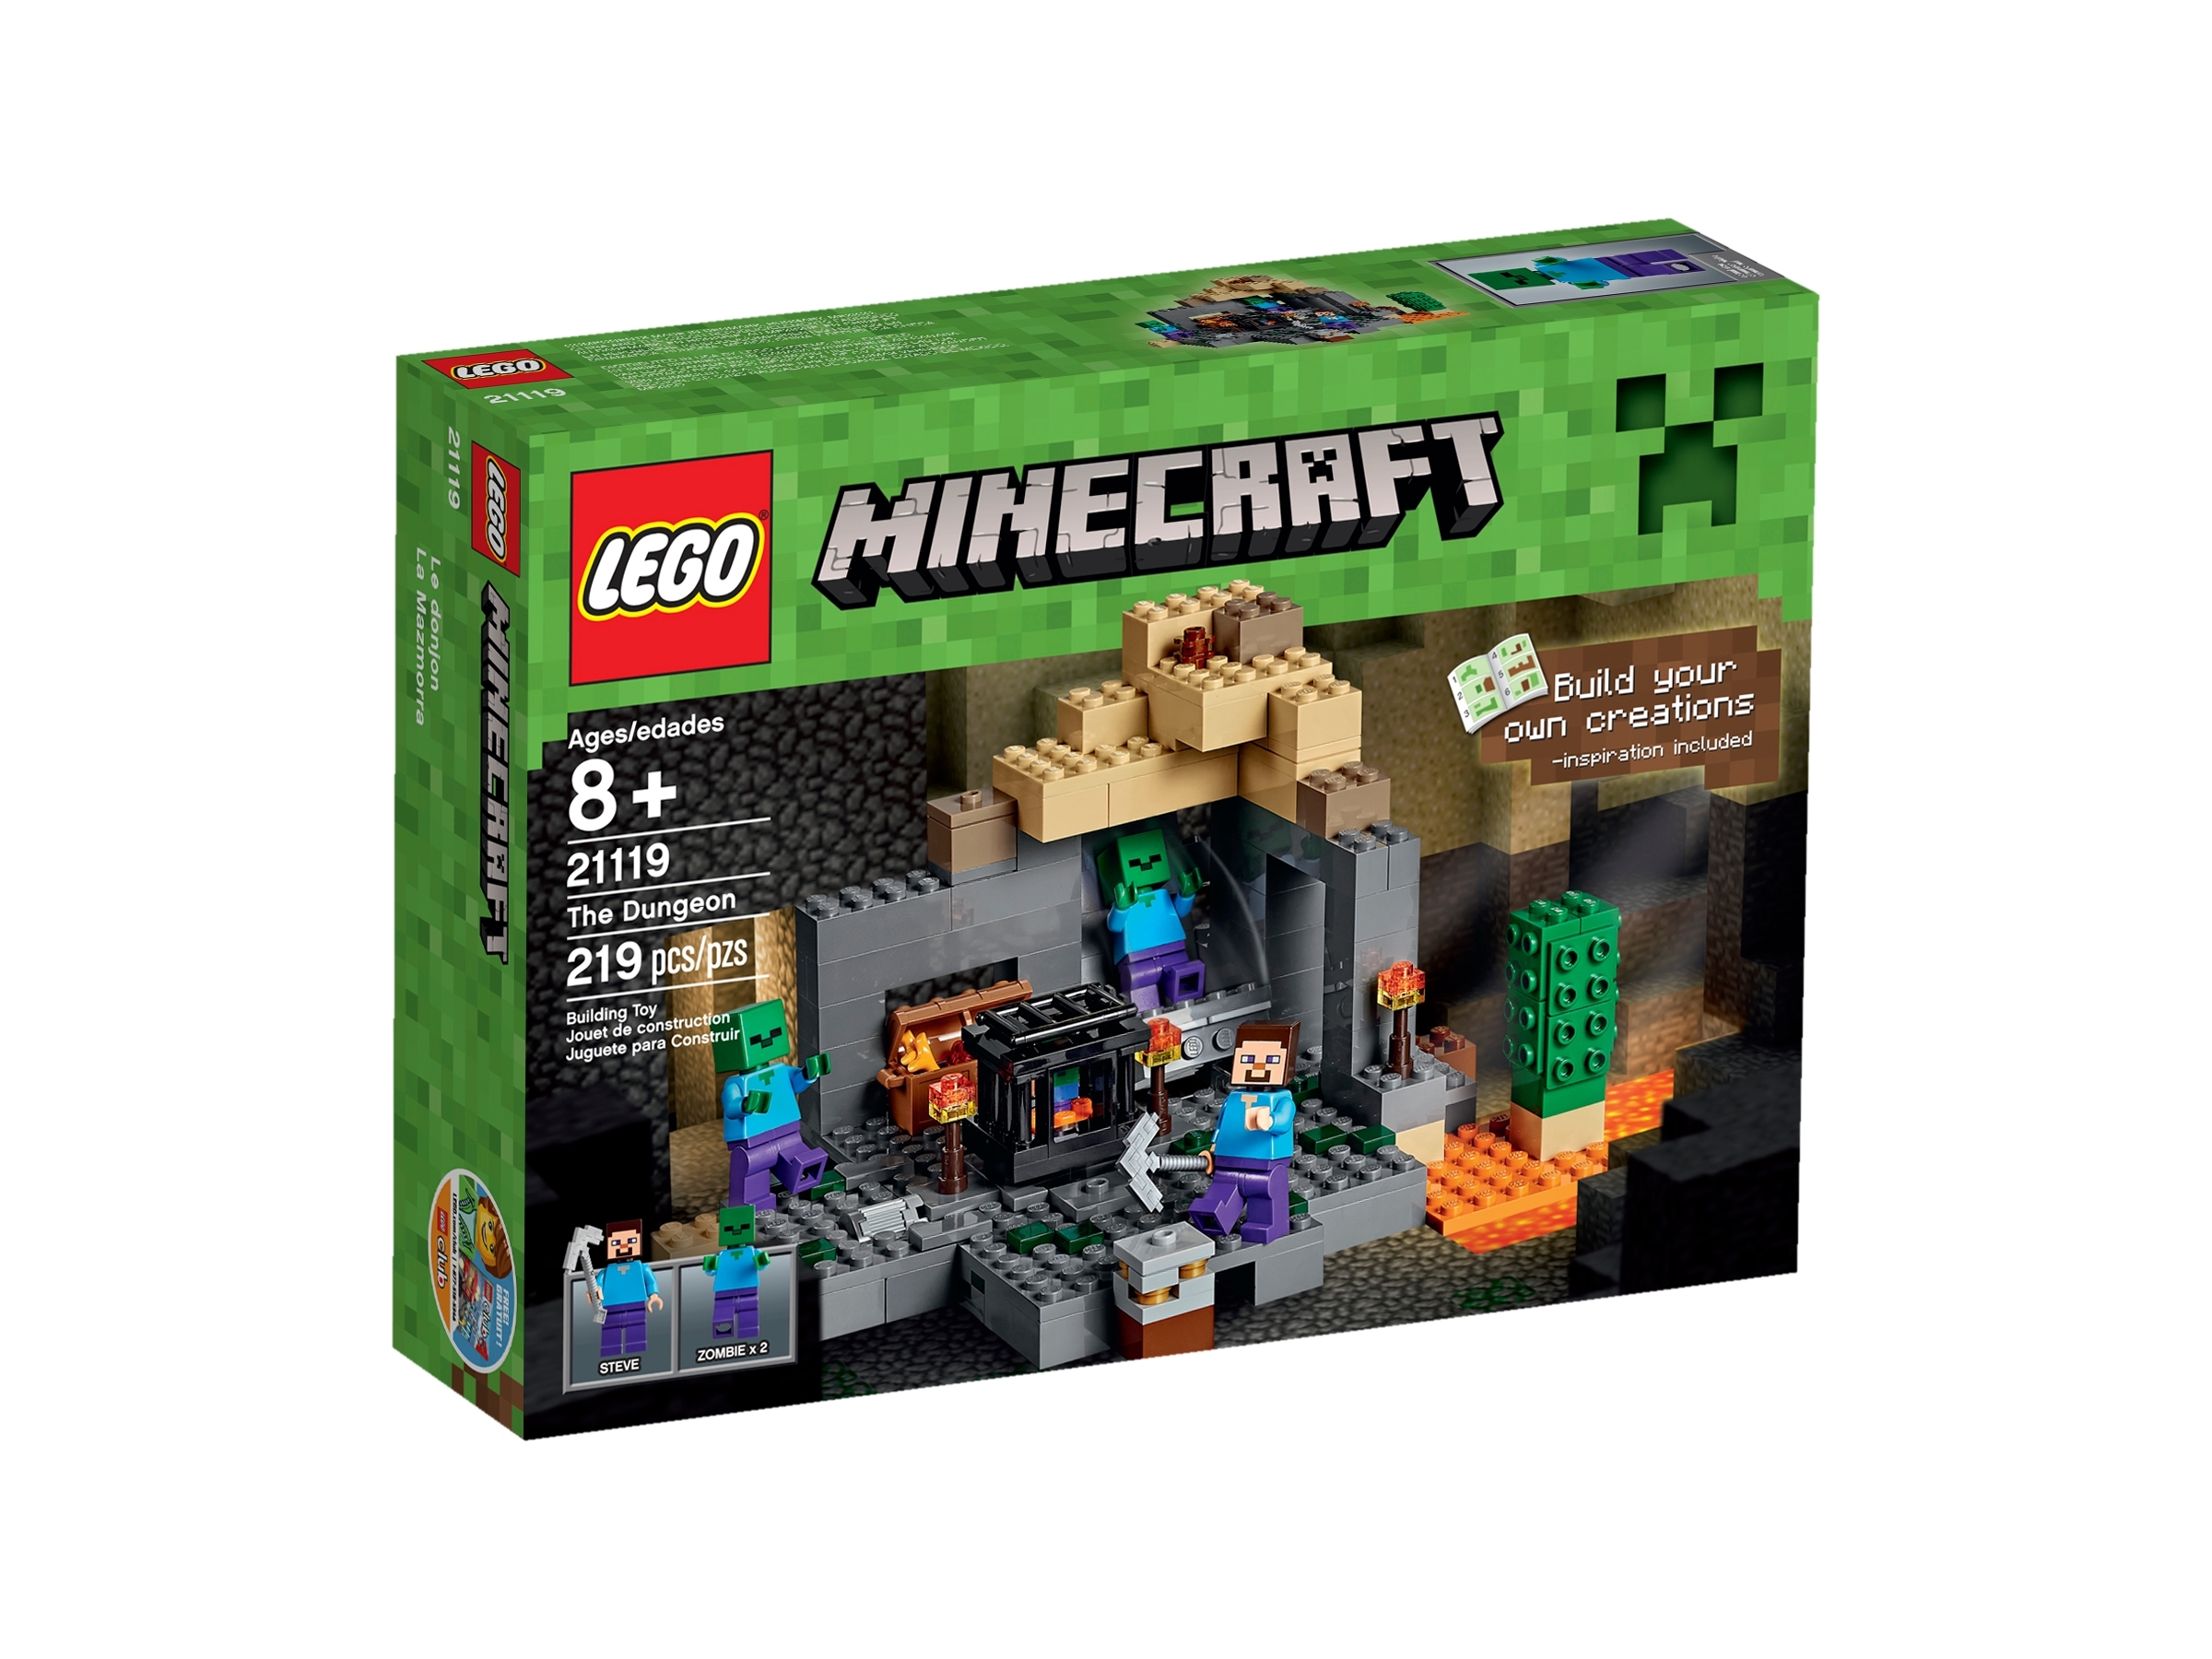 Skeleton 21115 21114 21119 21120 21116 LEGO minecraft x2 Figure Steve 